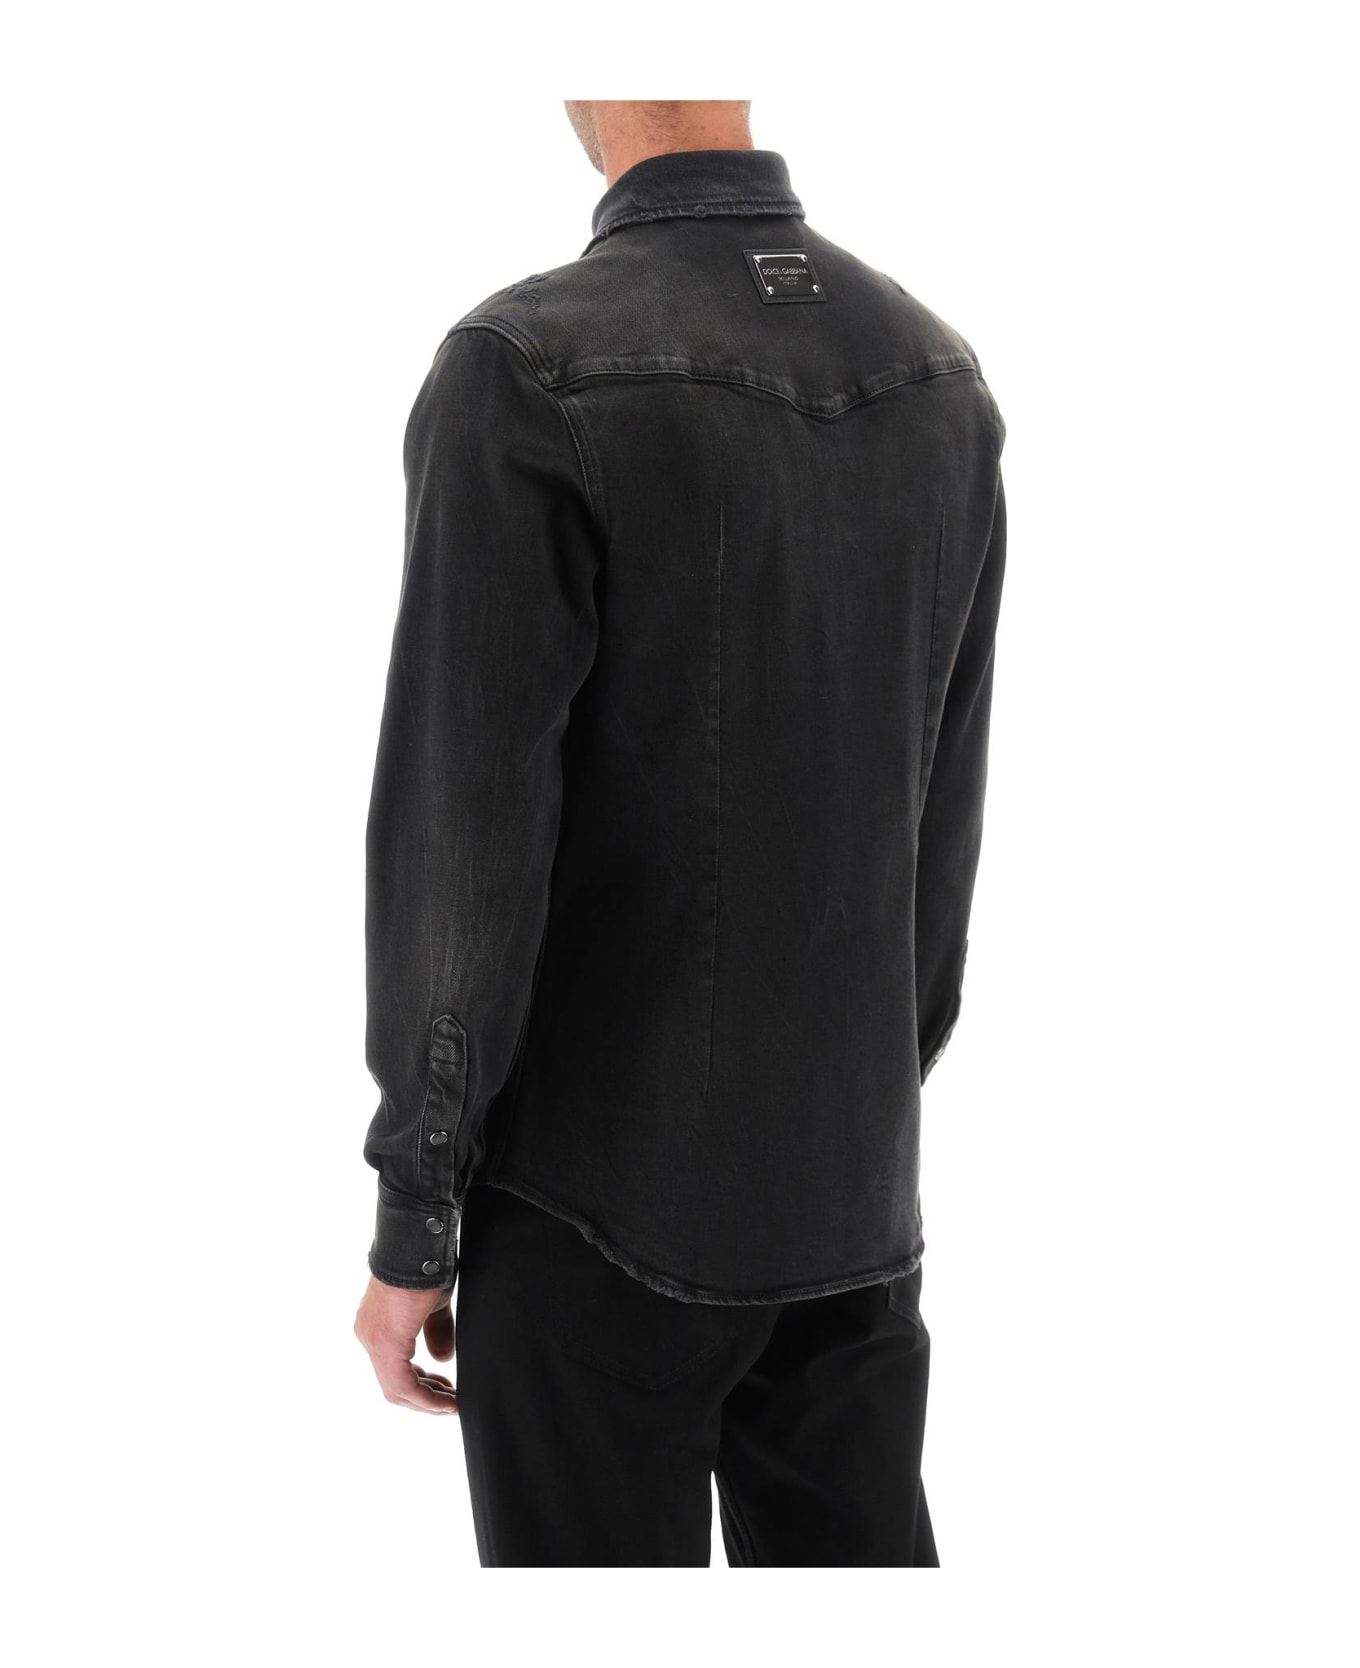 Dolce & Gabbana Distressed Denim Western Shirt - VARIANTE ABBINATA (Black) シャツ